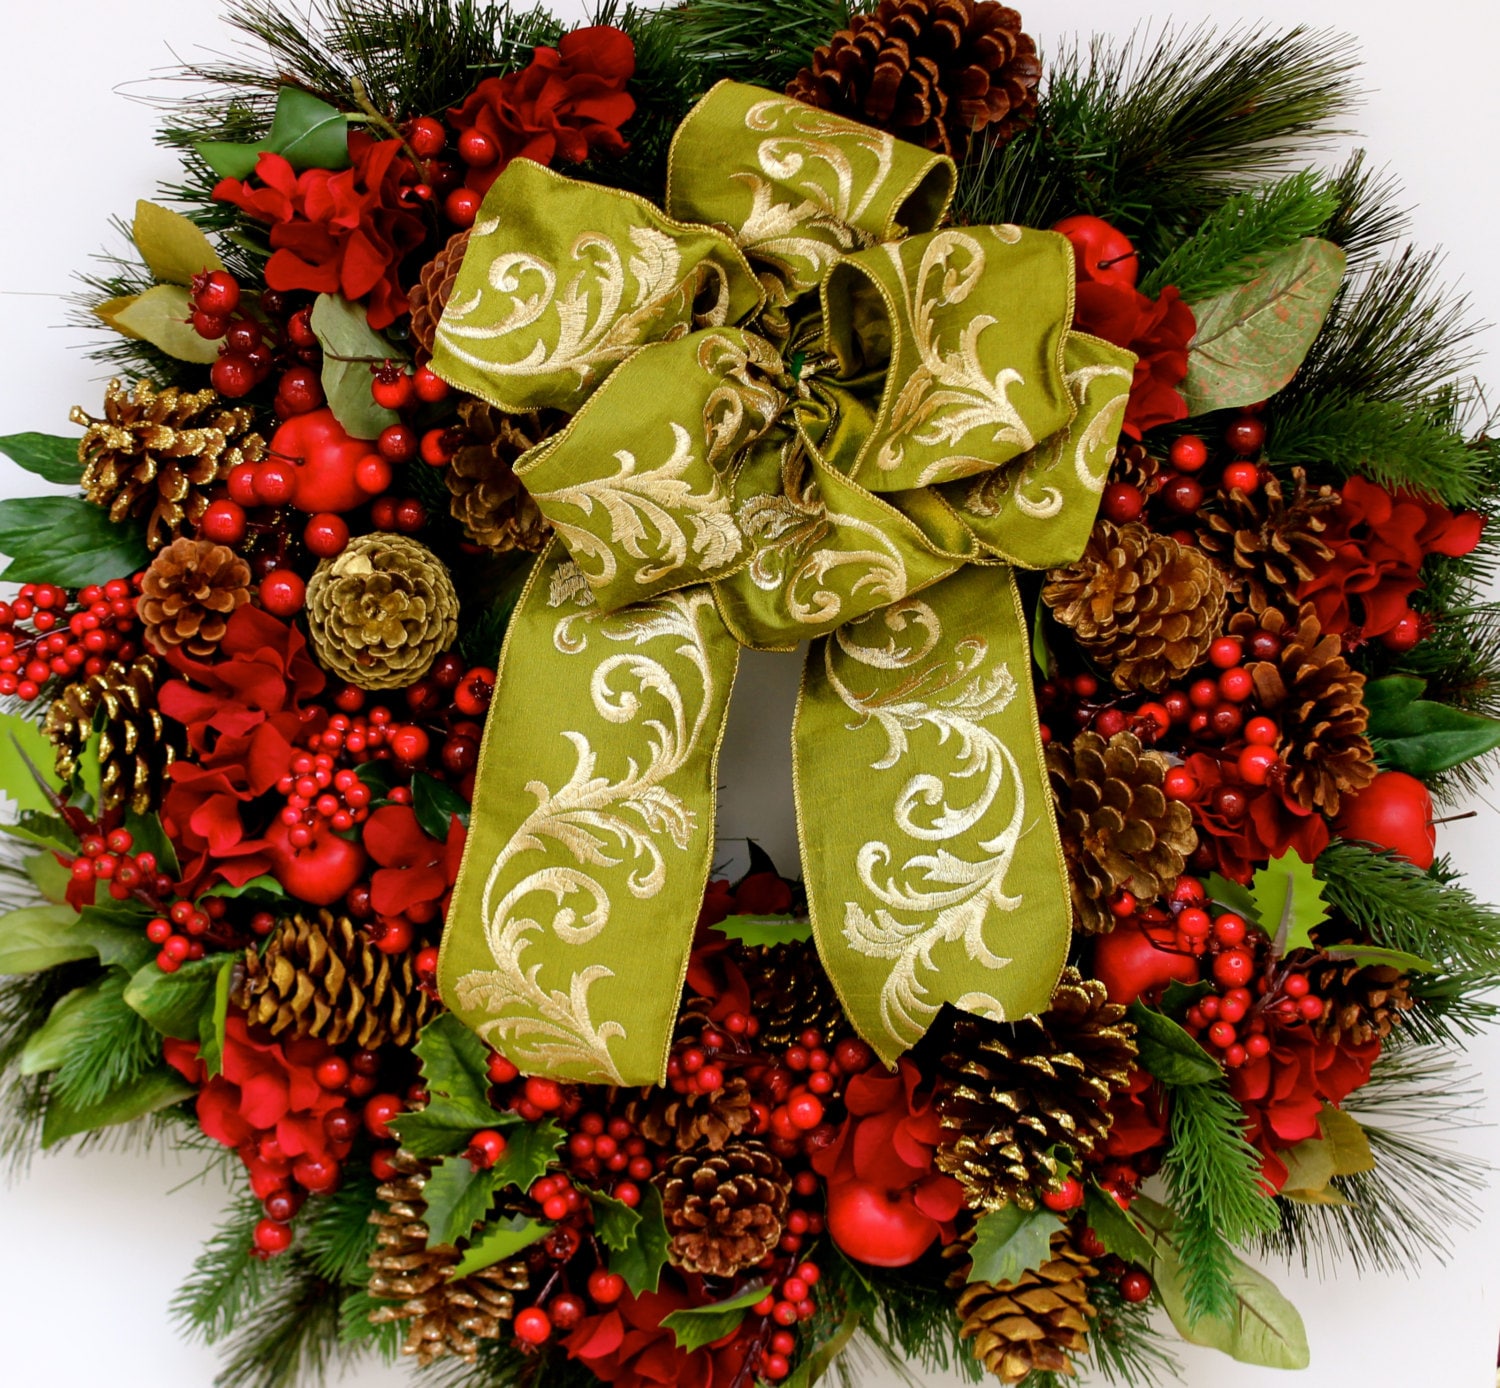 Winter Woodland Christmas Wreath, Etsy Christmas ideas, holiday front door wreath, Christmas decor, winter red Christmas wreath